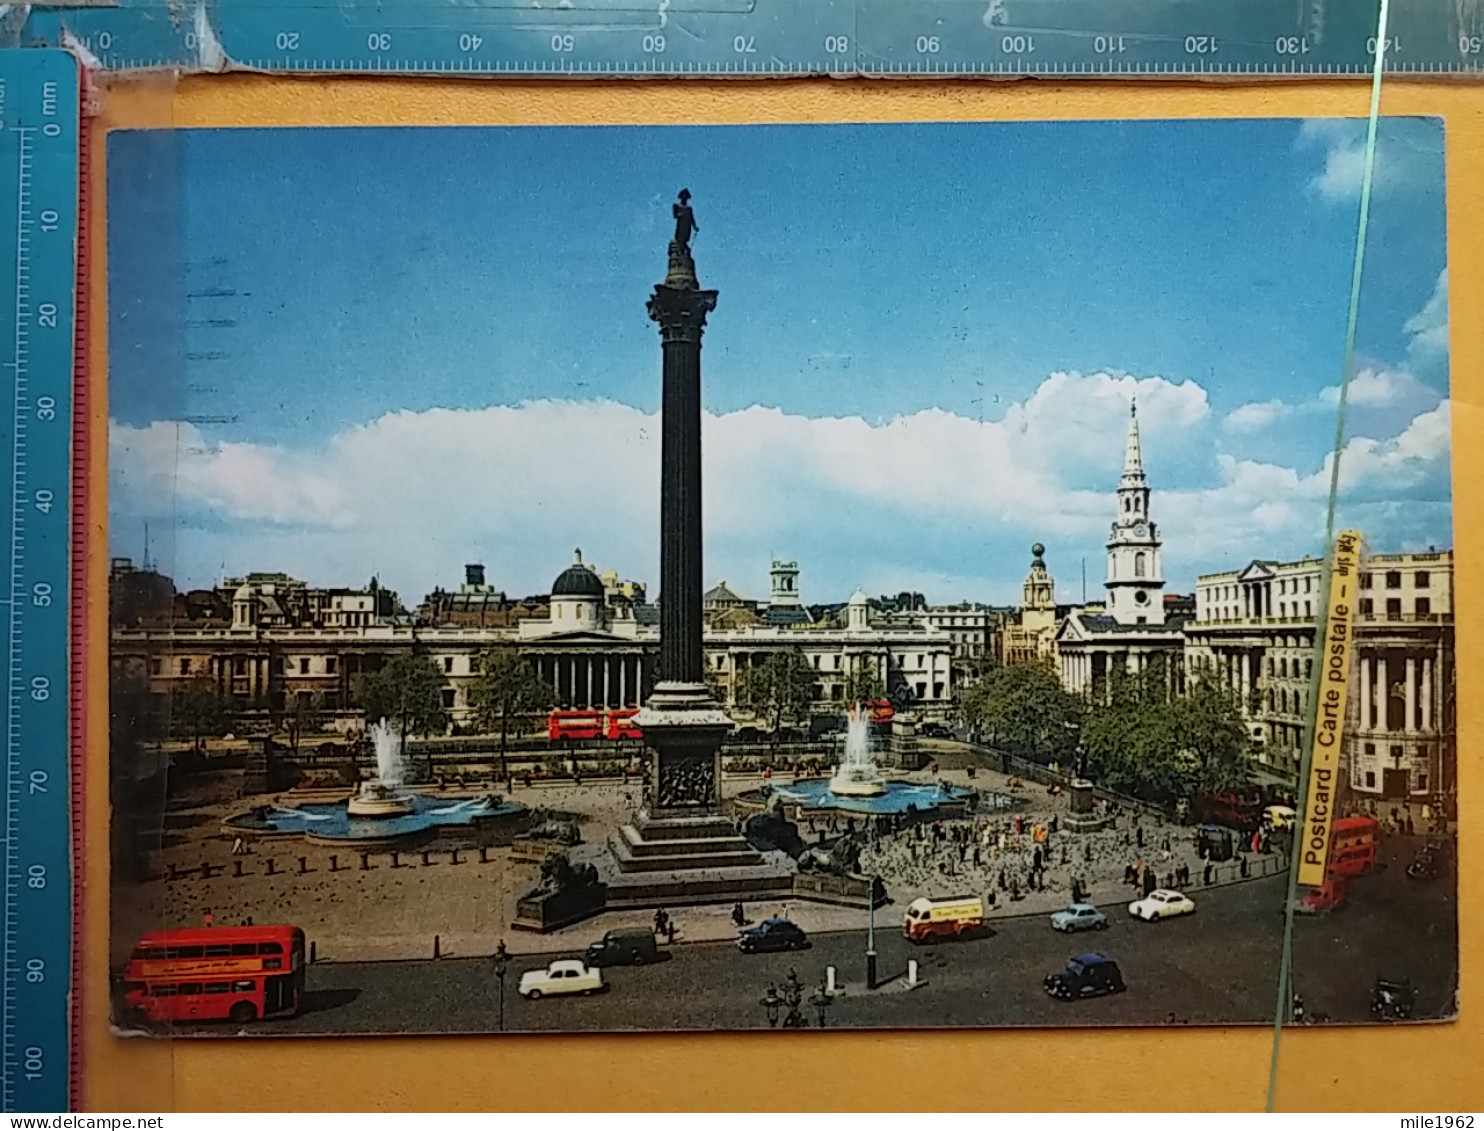 KOV 540-15 - LONDON, England,  - Trafalgar Square